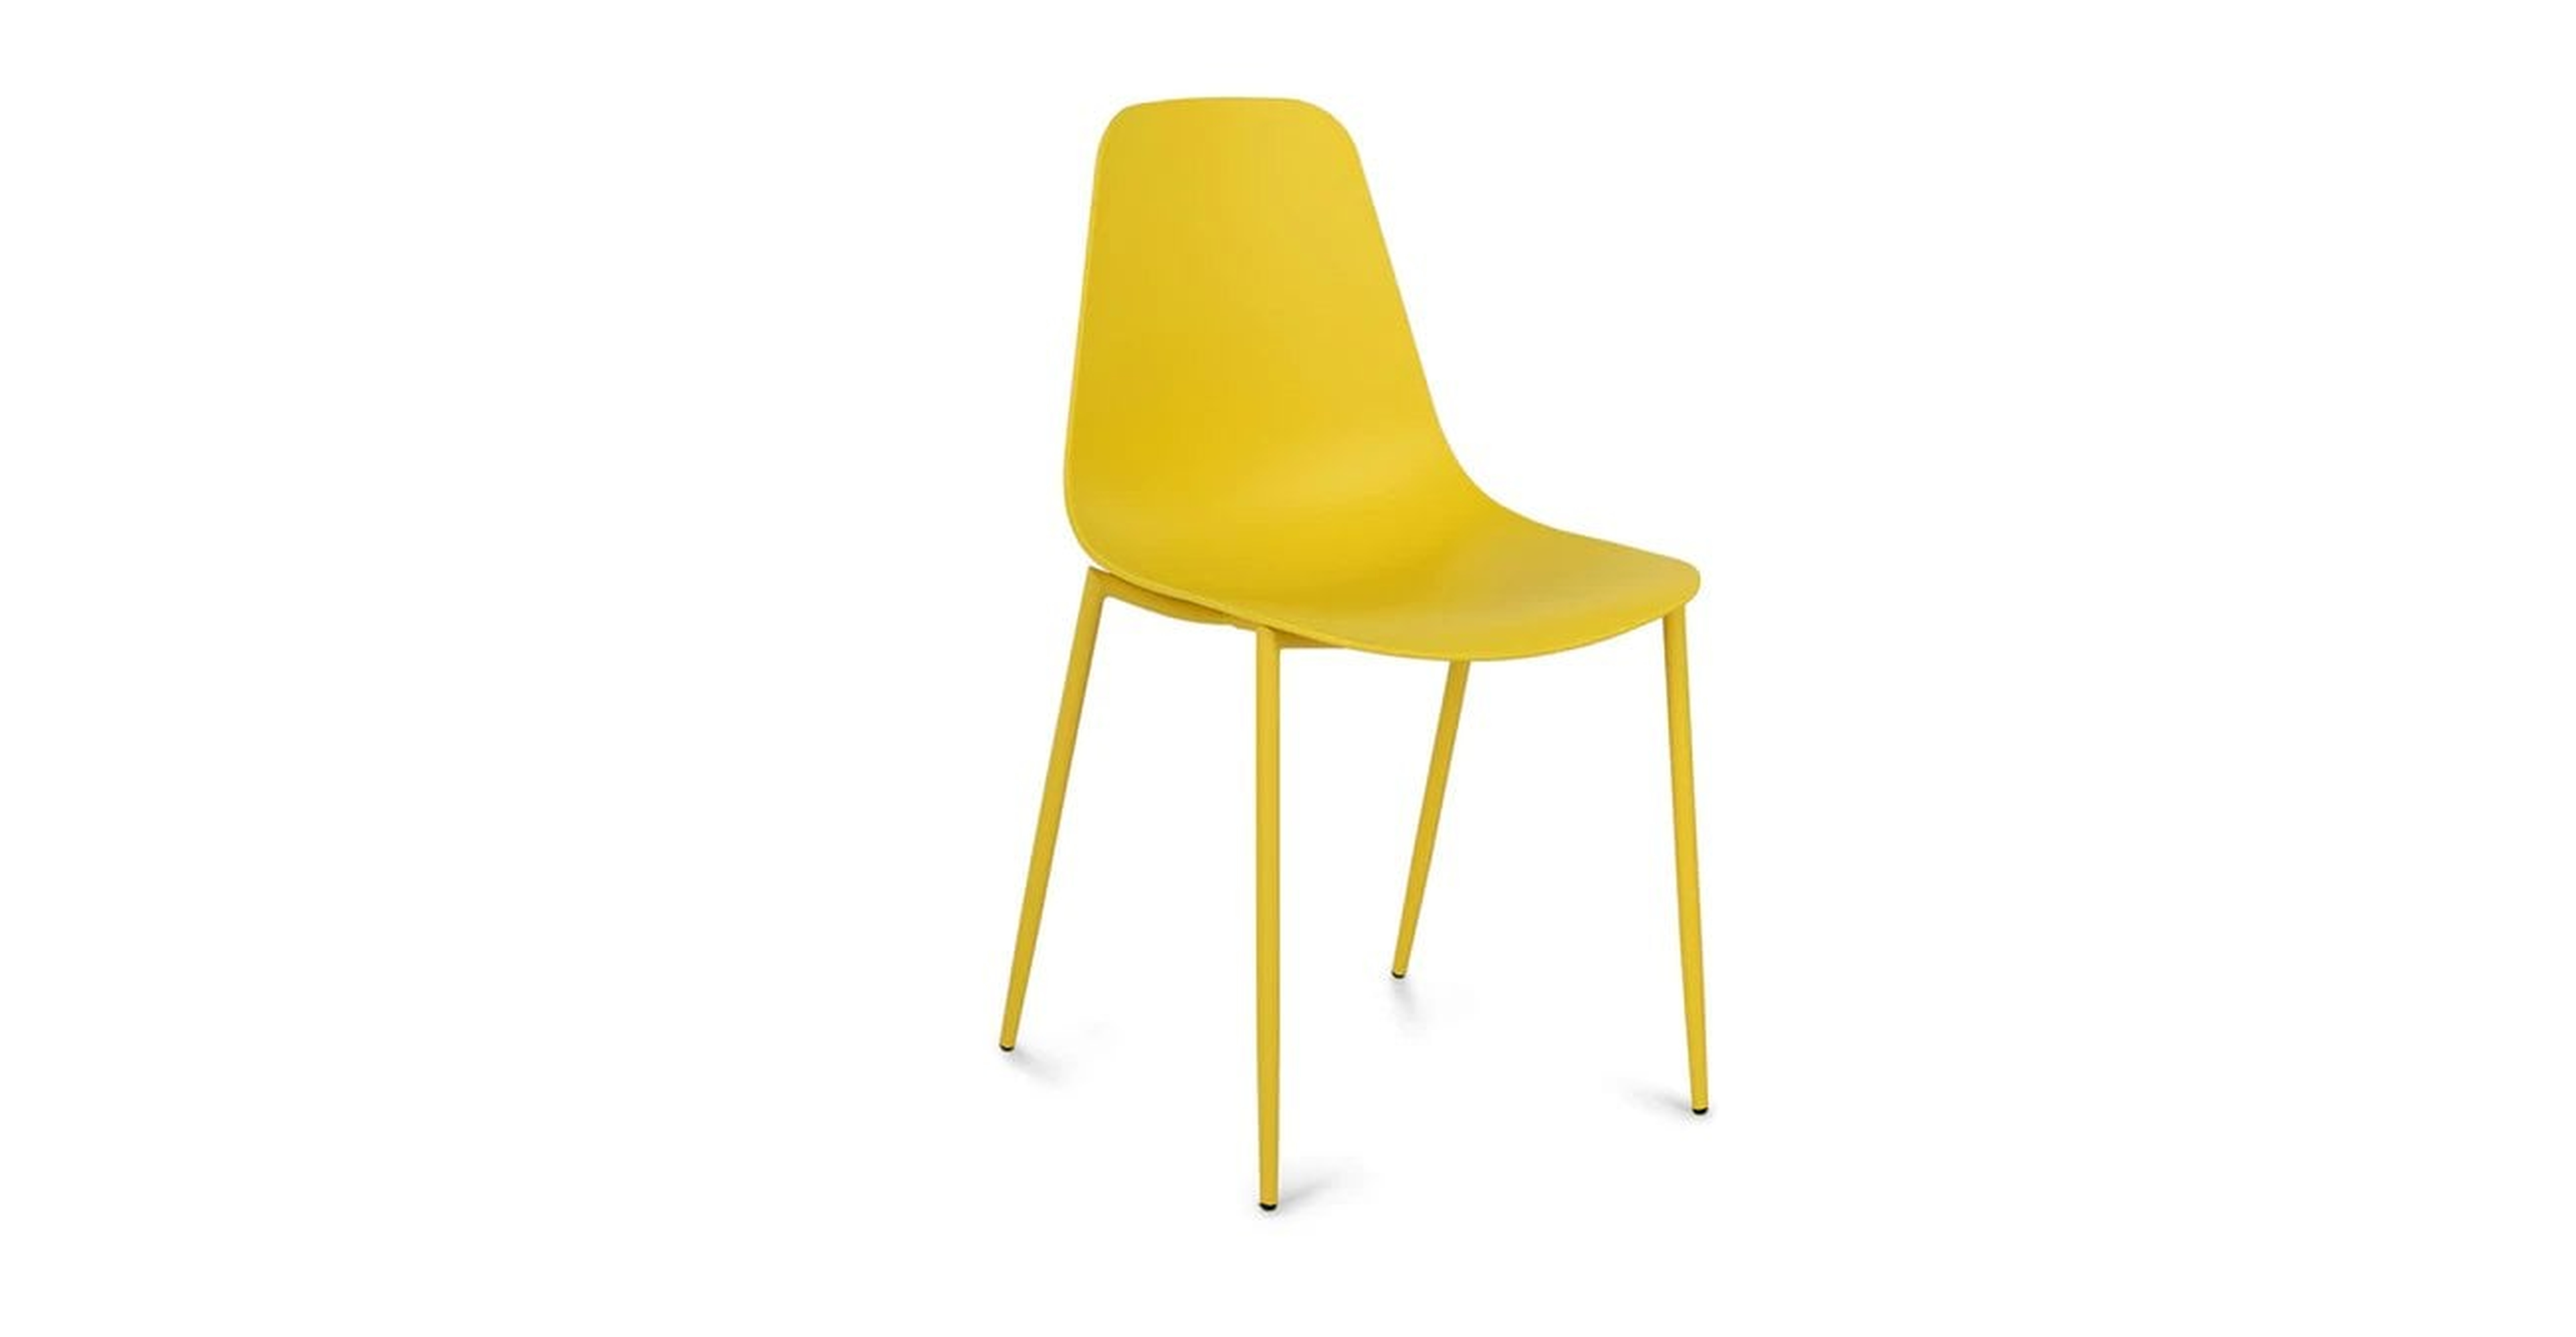 Svelti Daisy Yellow Dining Chair - Article